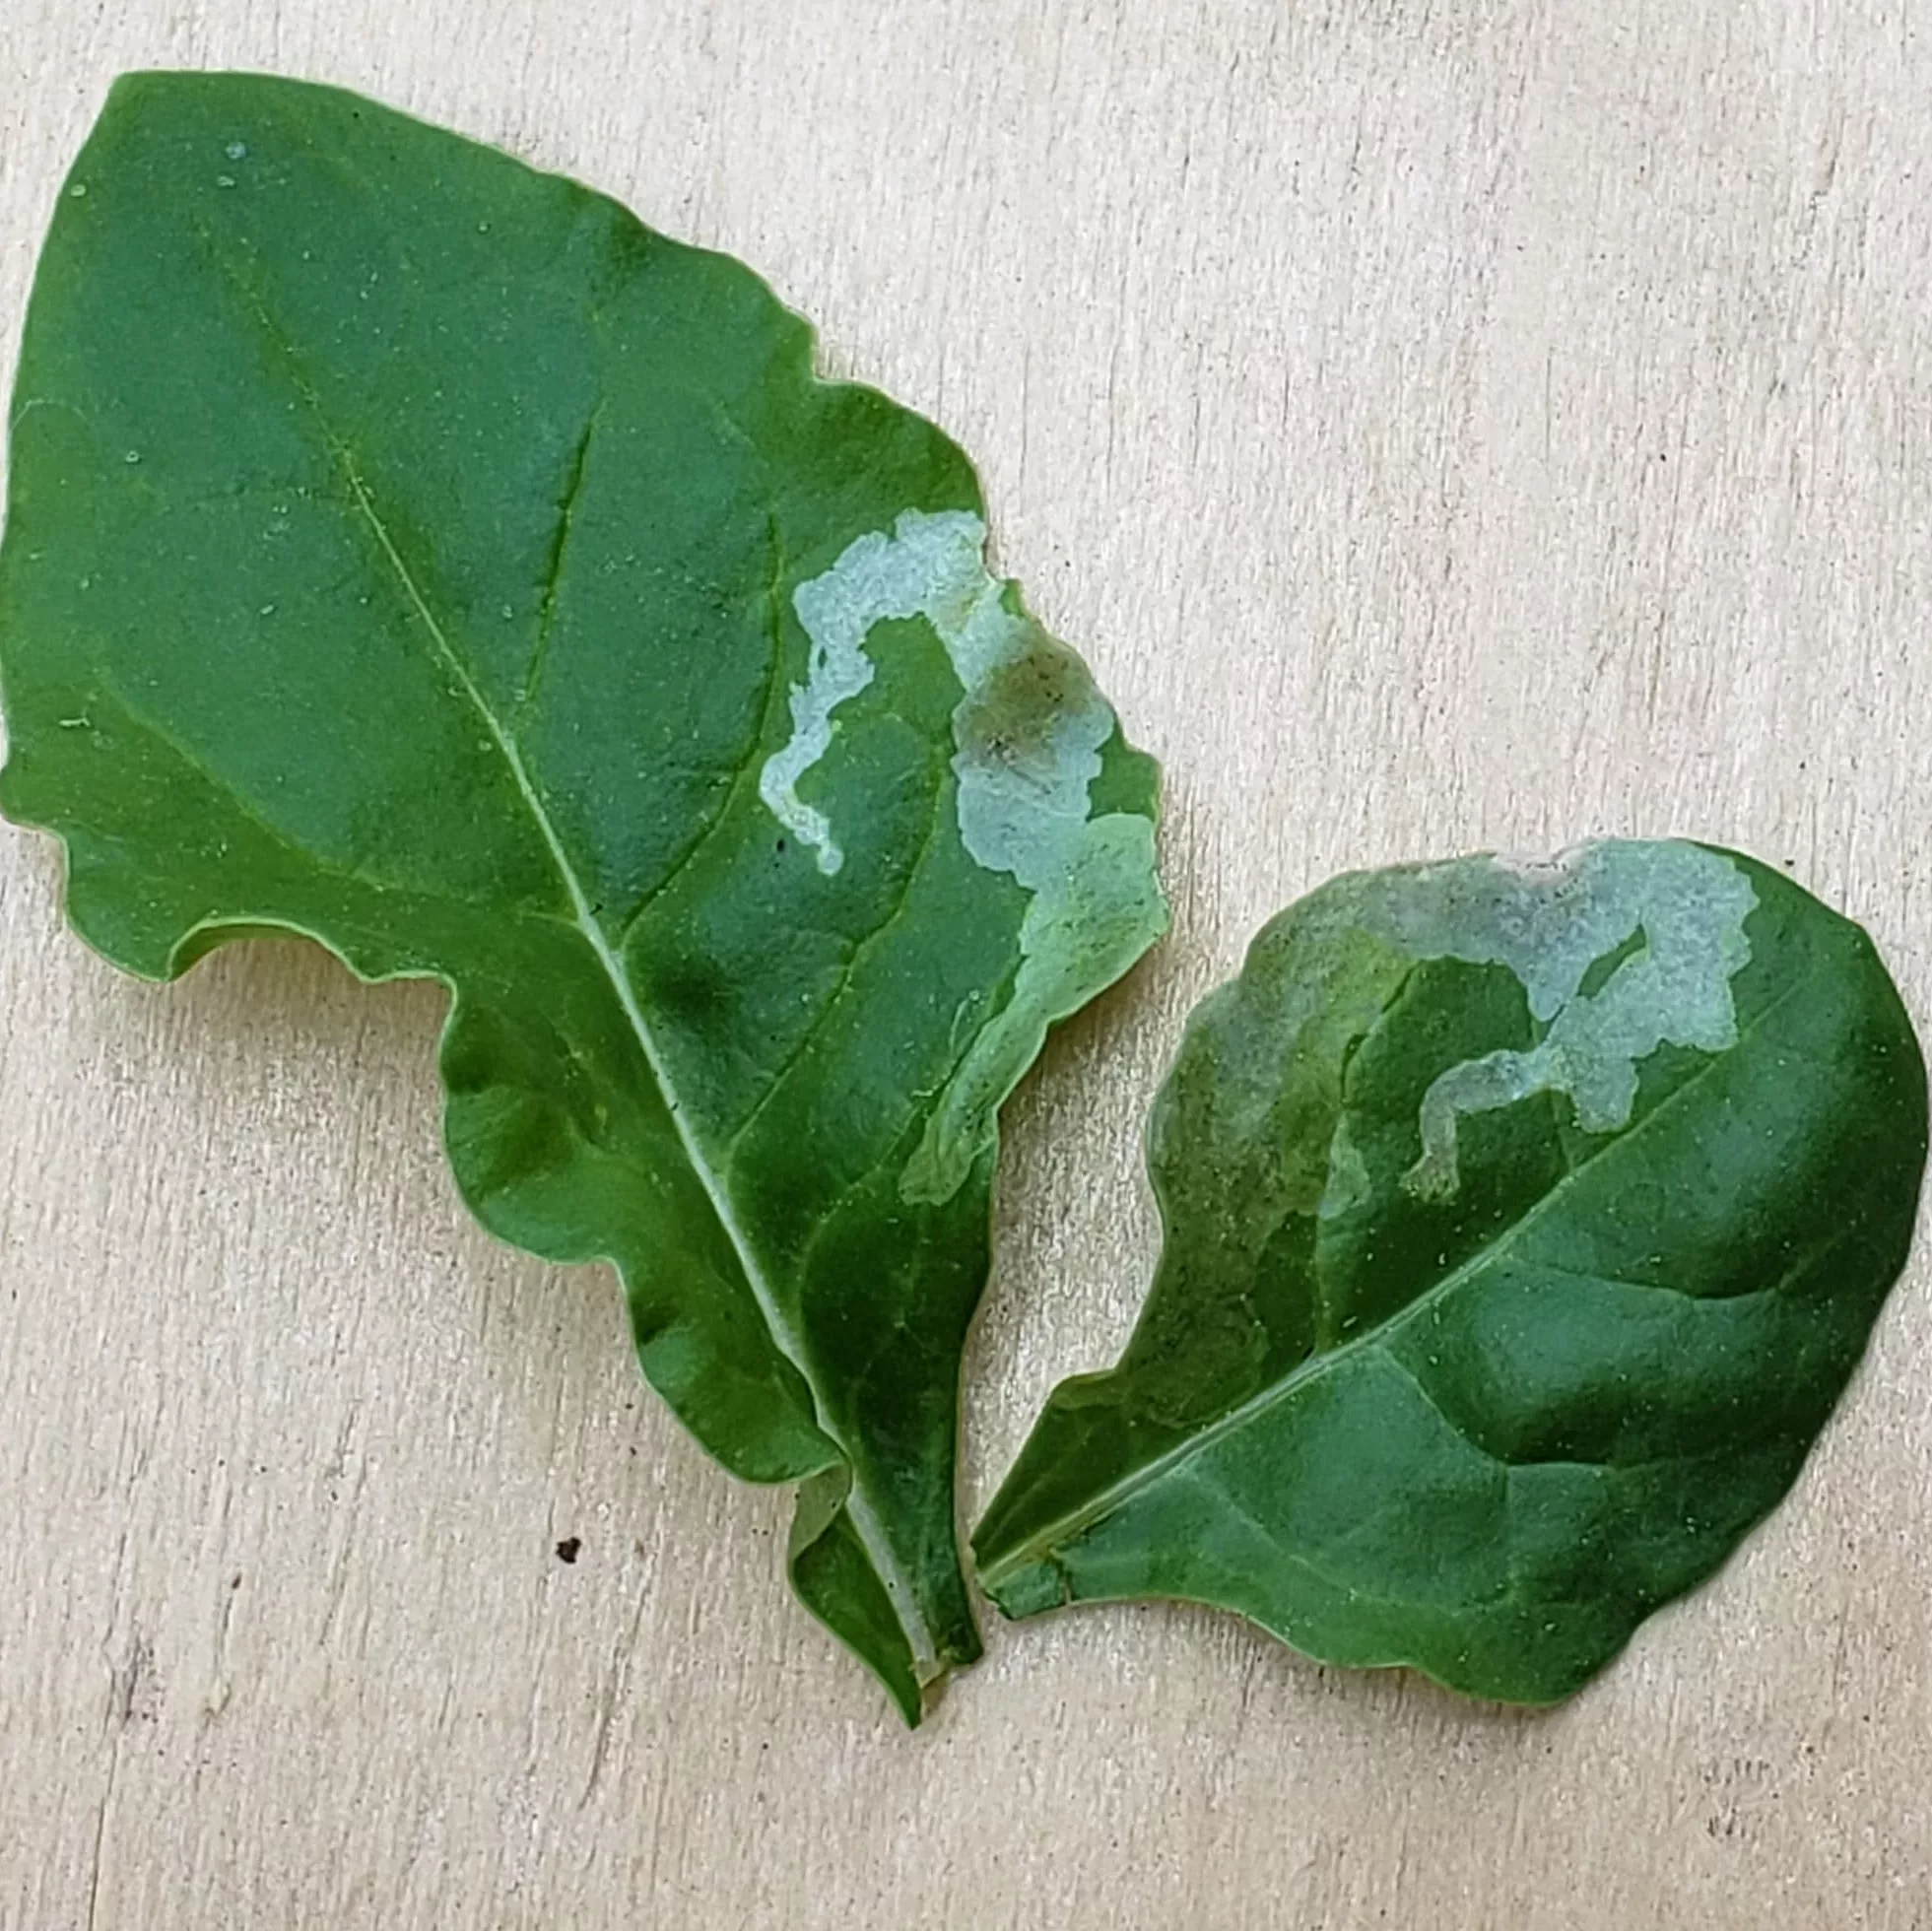 Leaf miner damage on a swiss chard leaf